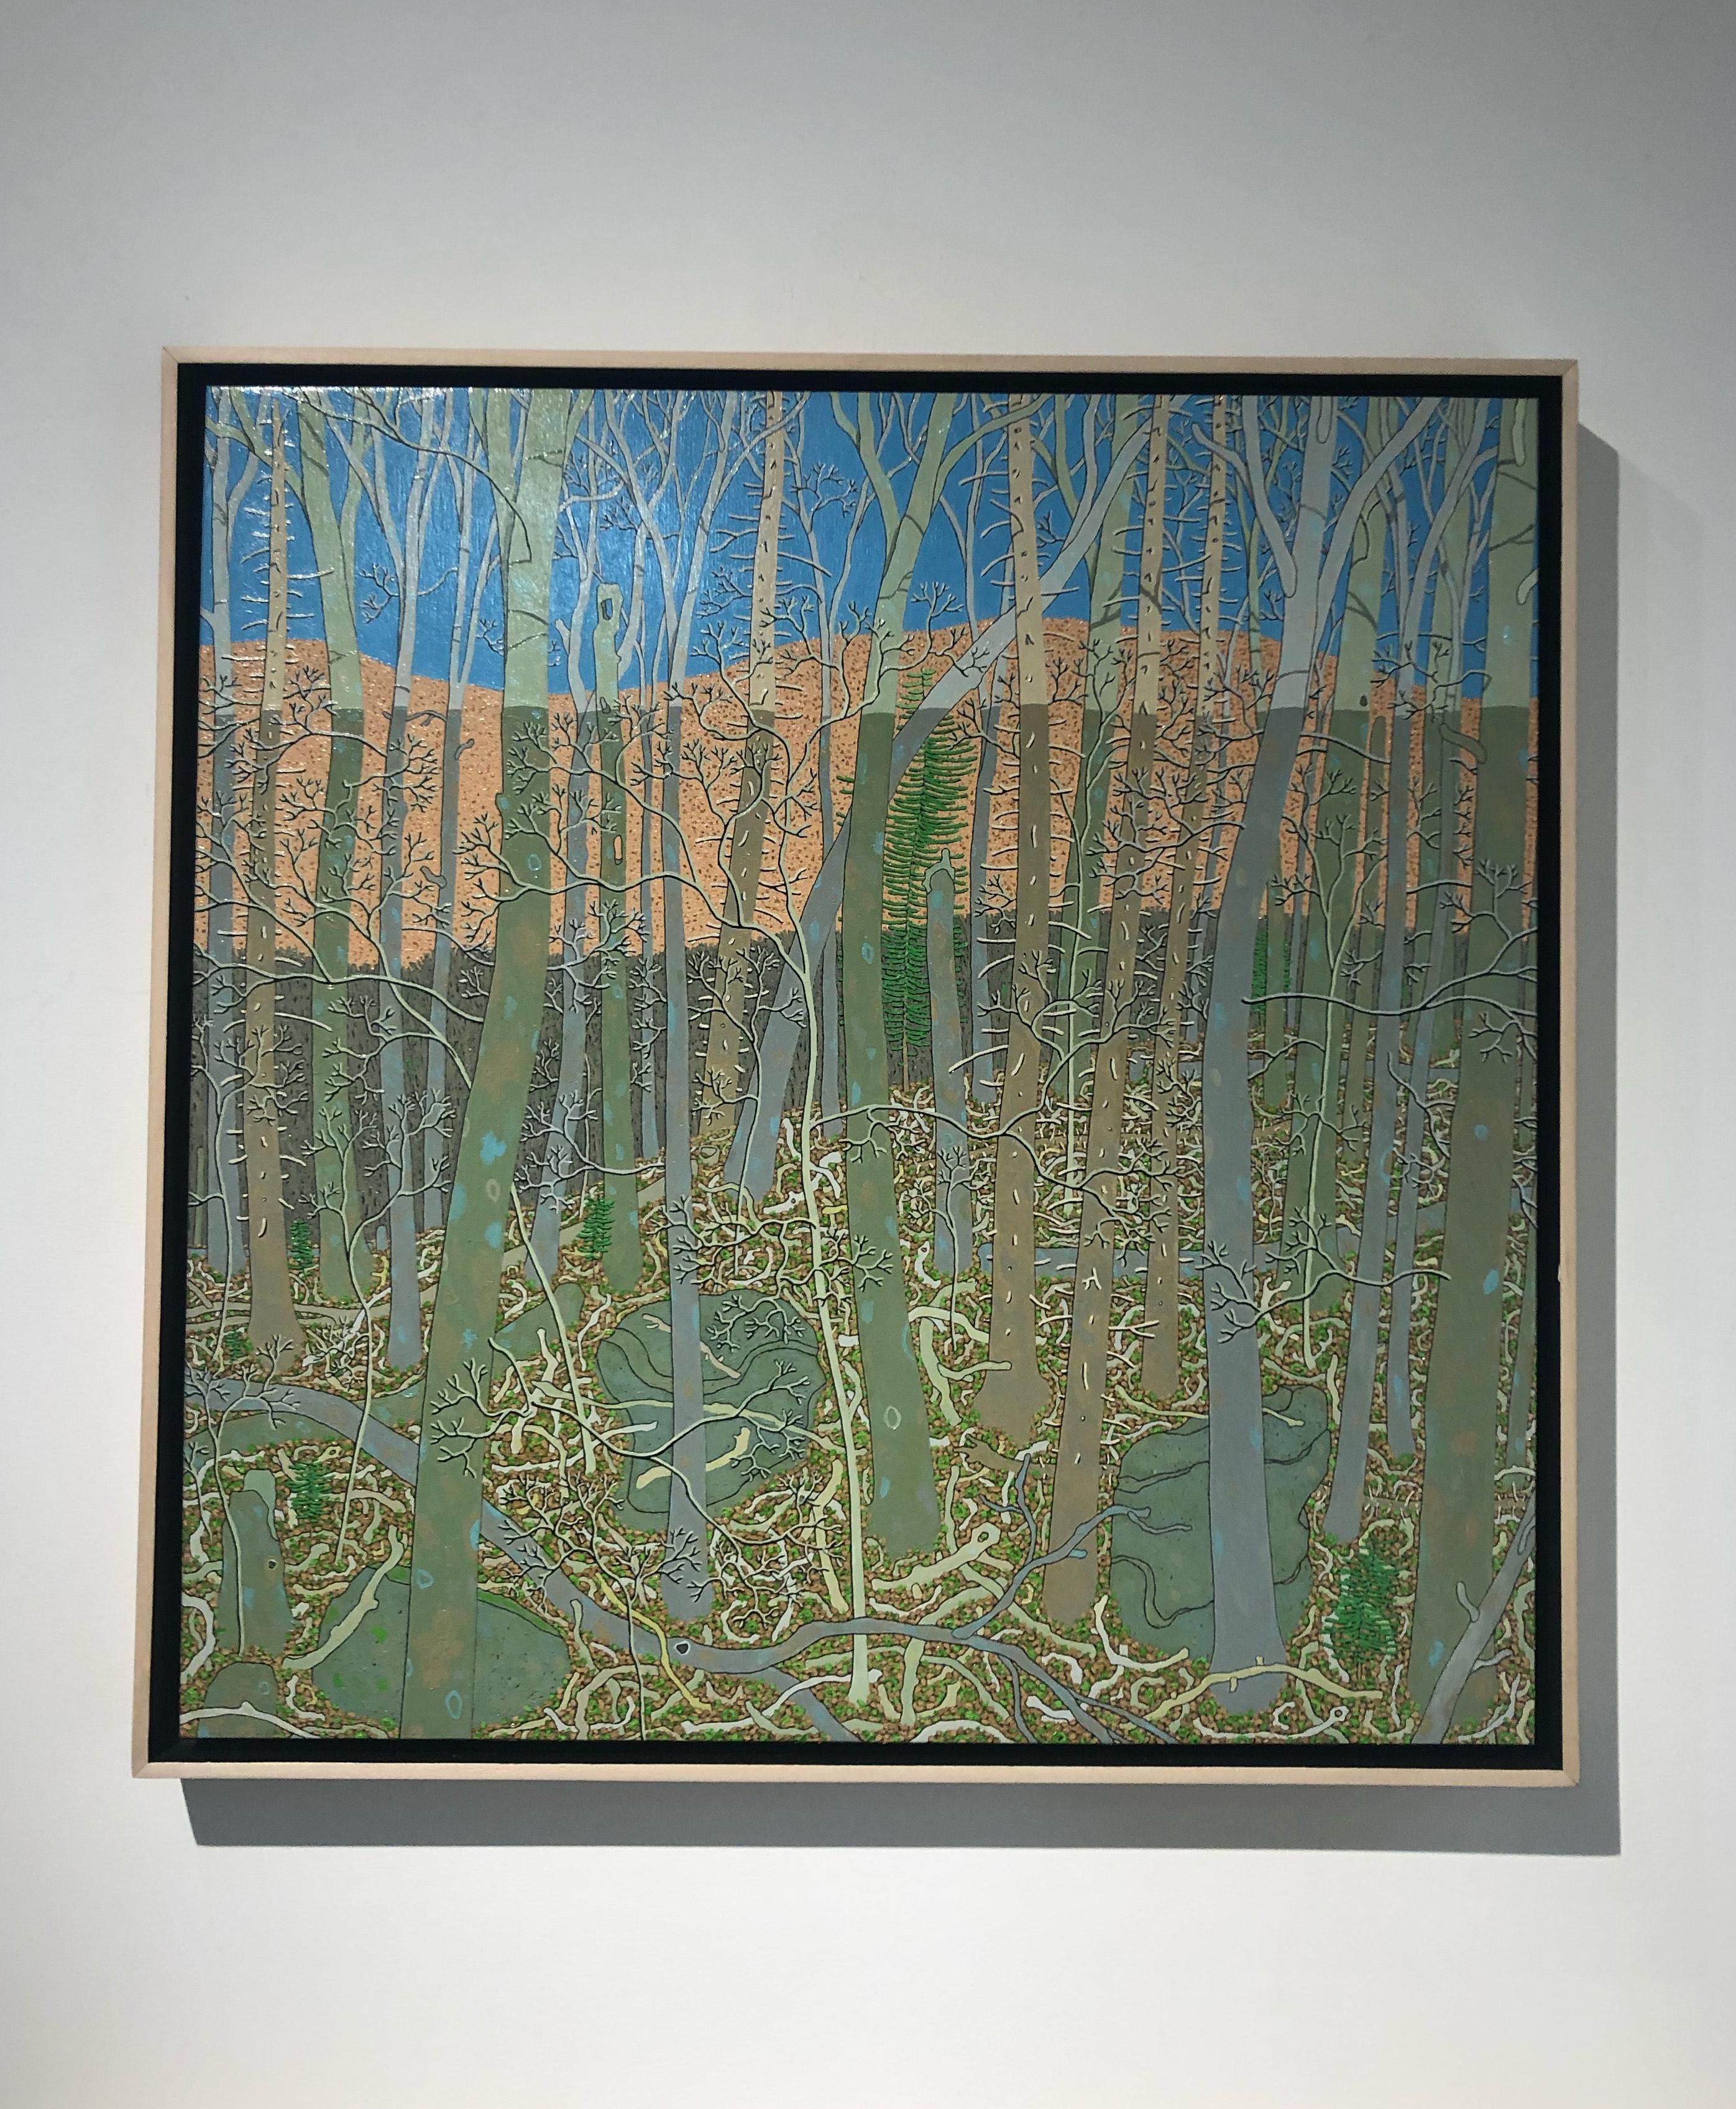 Wyatt Mountain Shadow Februar, Virginia Forest, Blau, Grün, Grau, Lachs, Pfirsich – Painting von Gregory Hennen